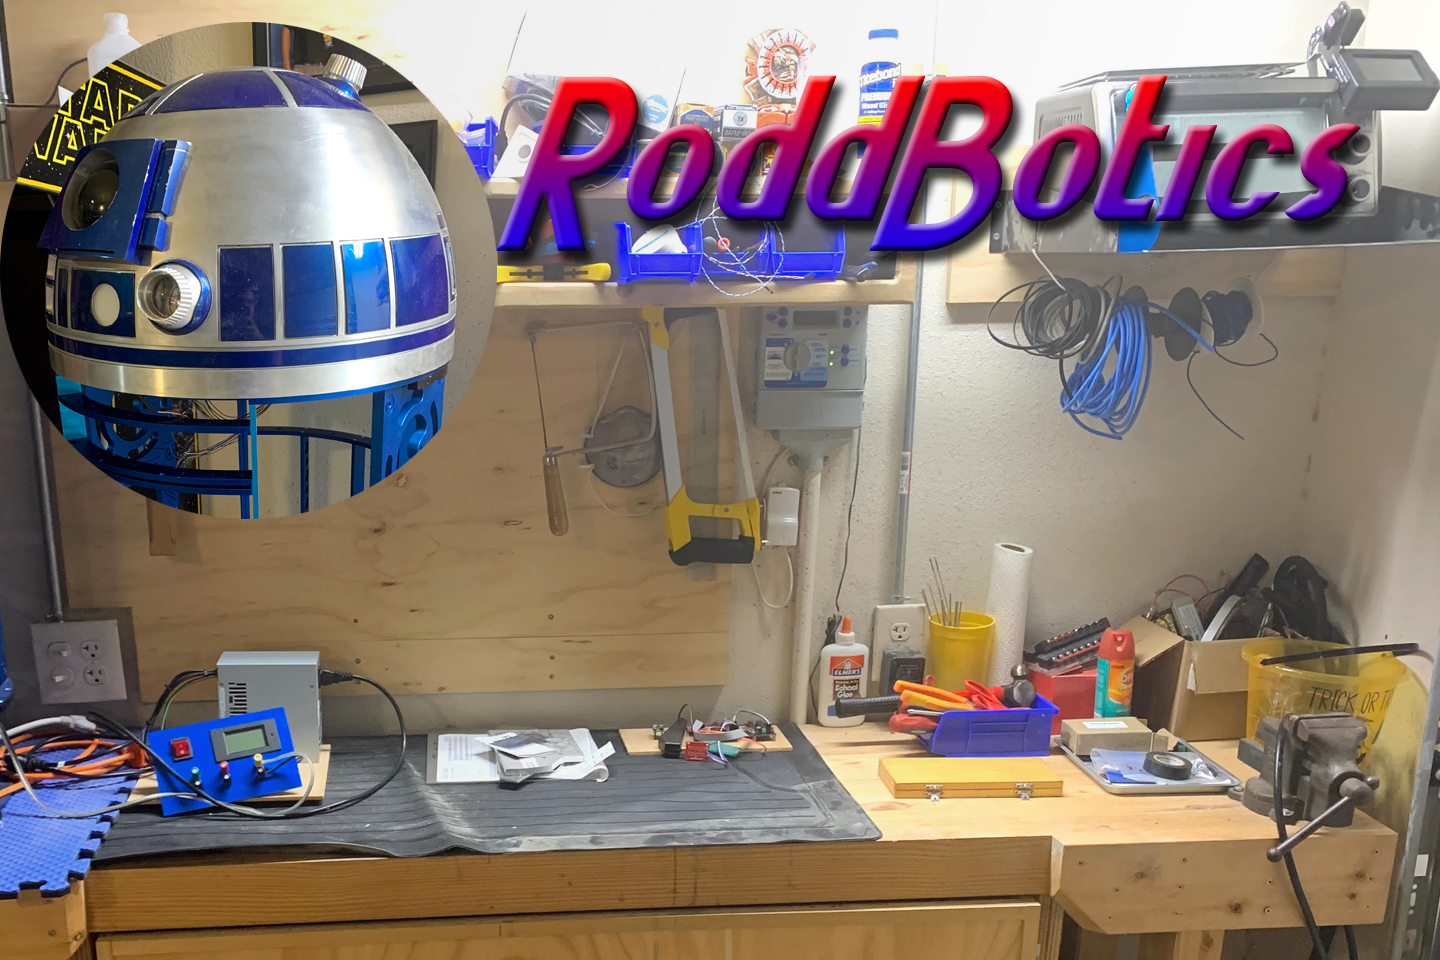 roddbotics.com